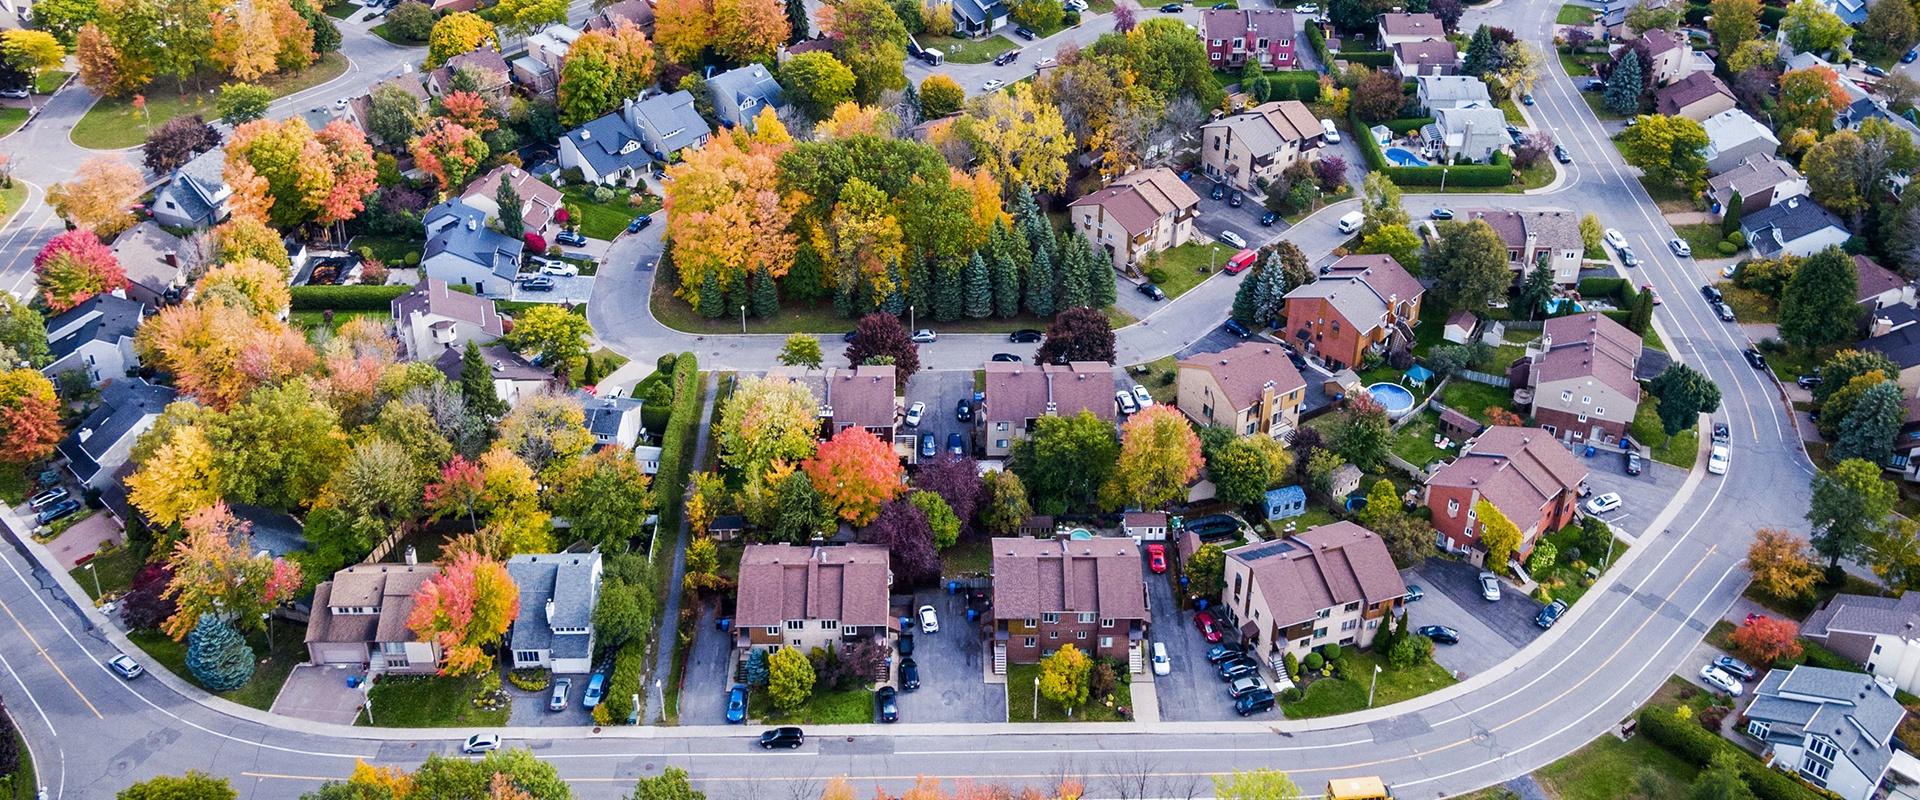 an overhead view of a residential neighborhood